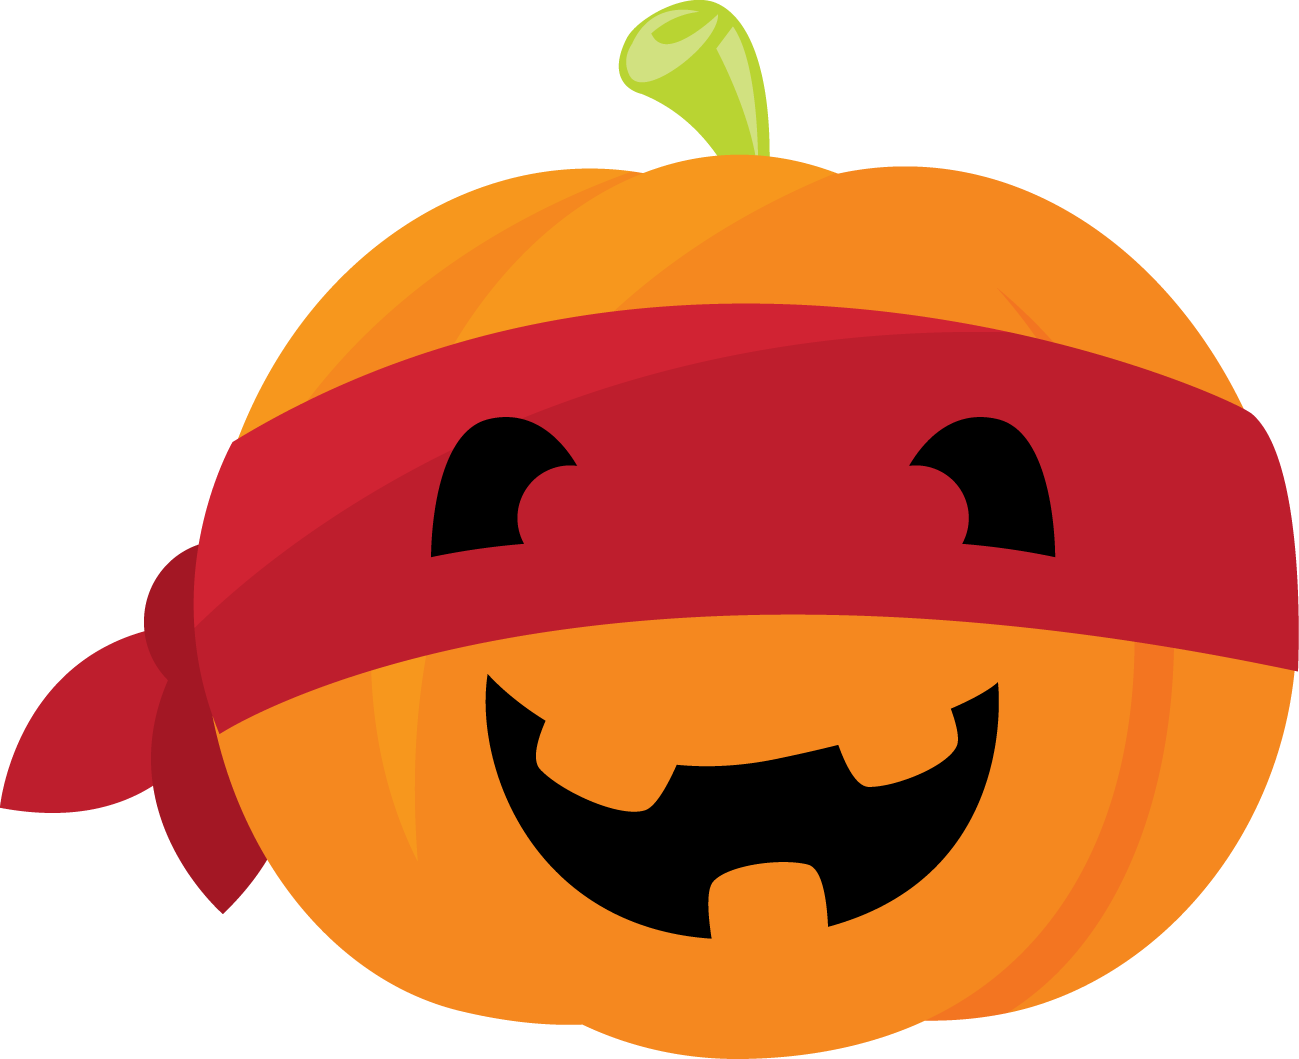 Halloween Pumpkin Clipart. | Oh My Fiesta! in english